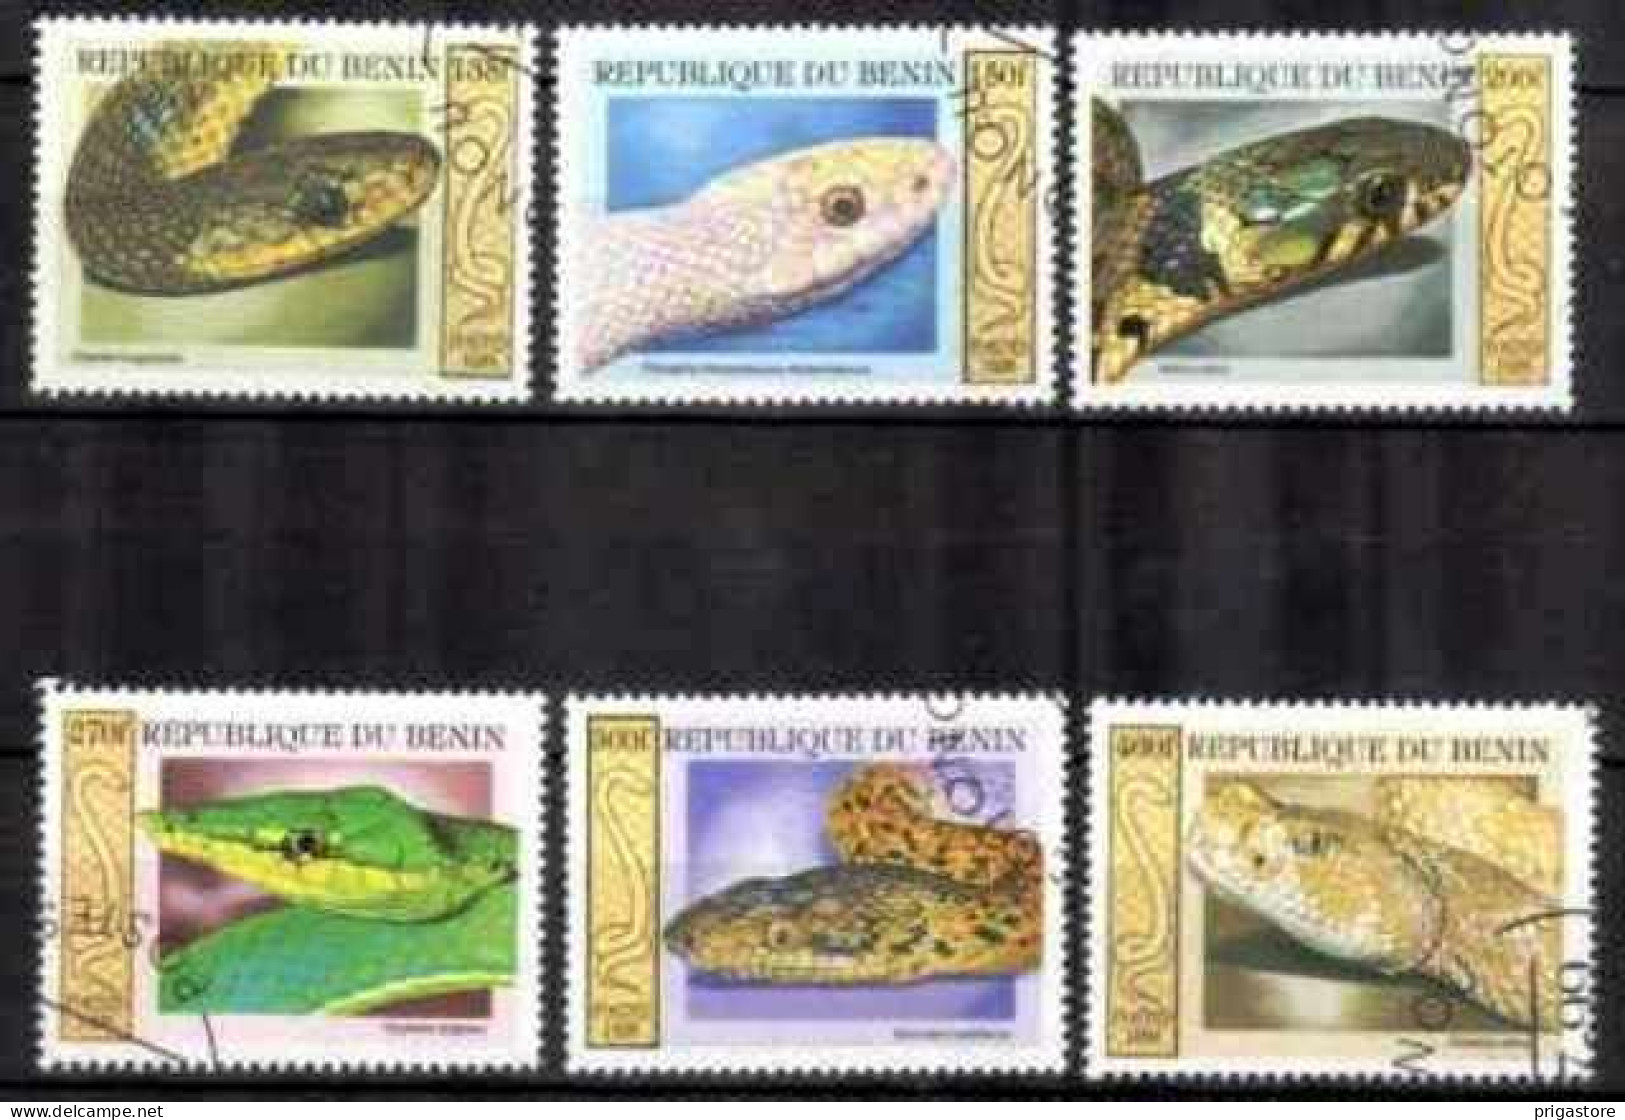 Animaux Serpents Bénin 1999 (30) Yvert N° 914 à 919 Oblitéré Used - Snakes